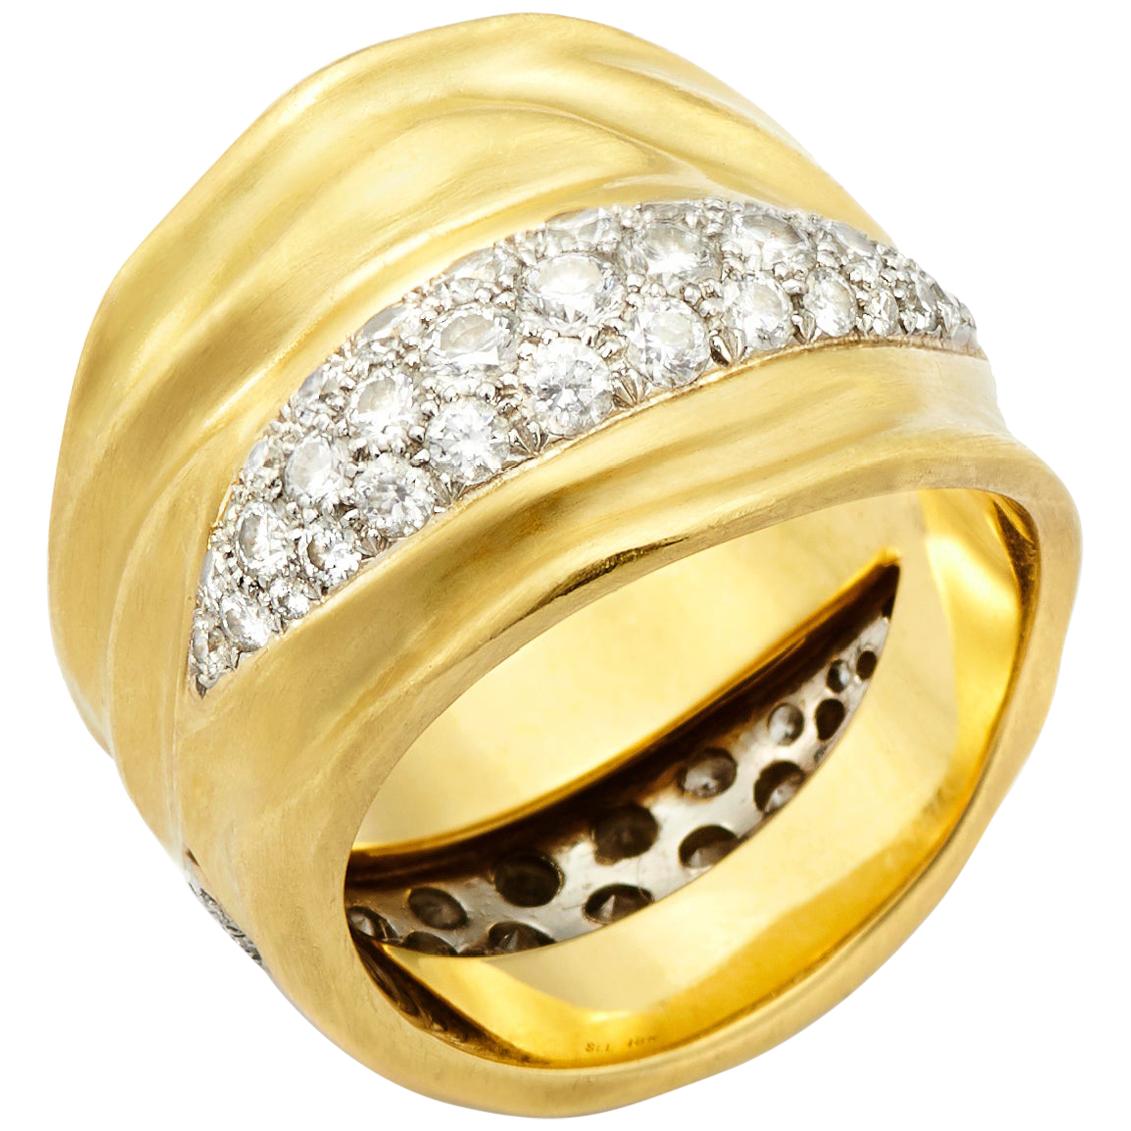 Susan Lister Locke 18K Gold Burst Ring with 1.80 Carat Brilliant Cut Diamonds